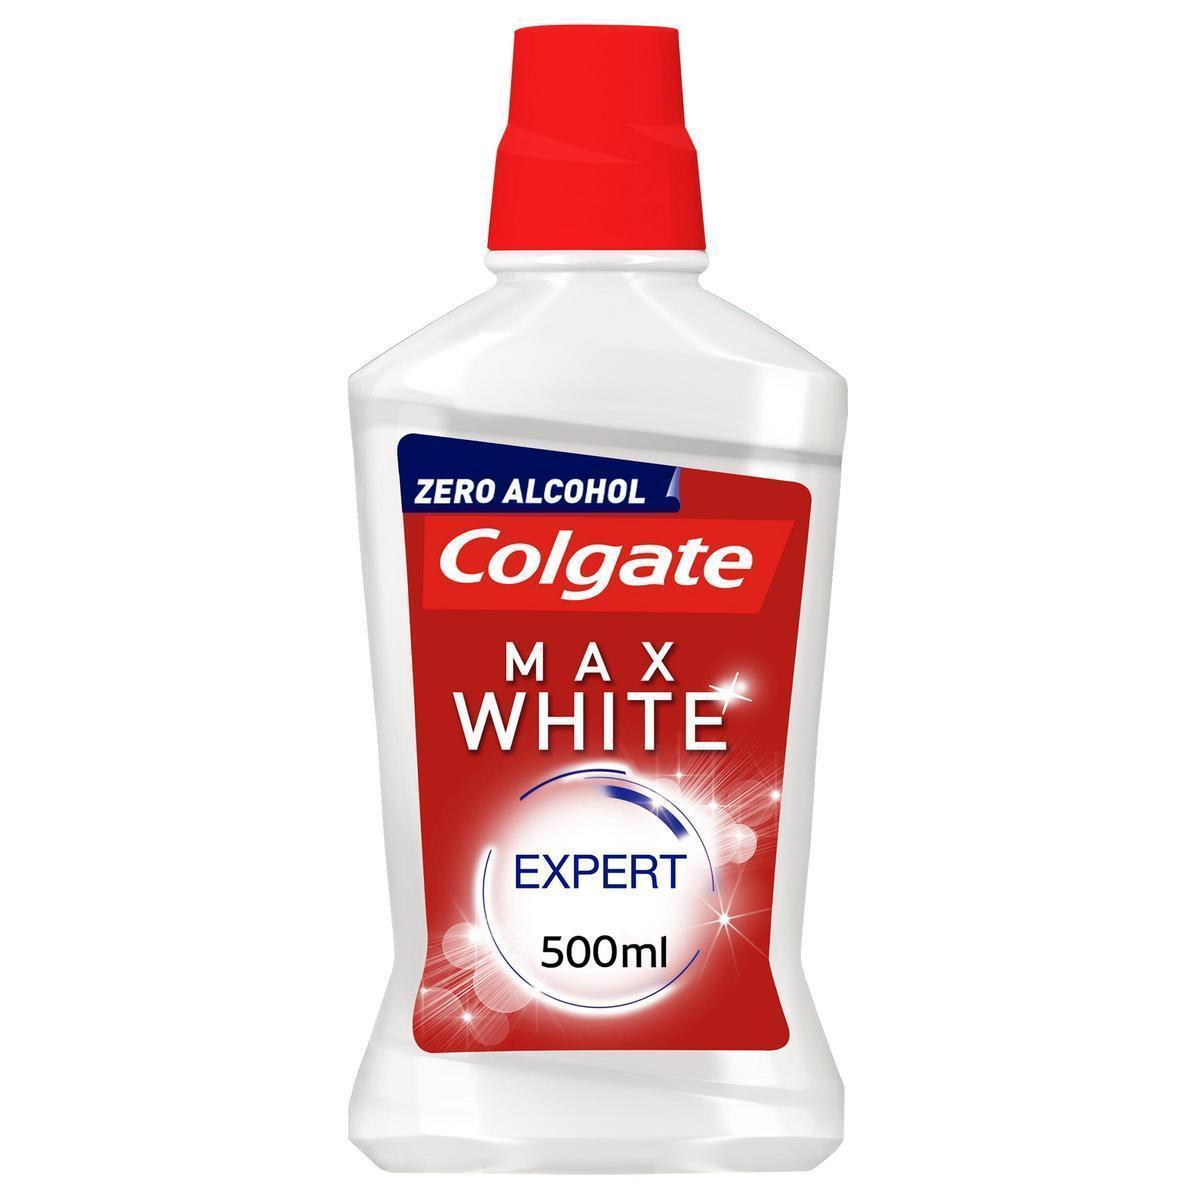 Colgate - Enjuague bucal blanqueador Colgate Max White Expert, dientes blancos 500ml